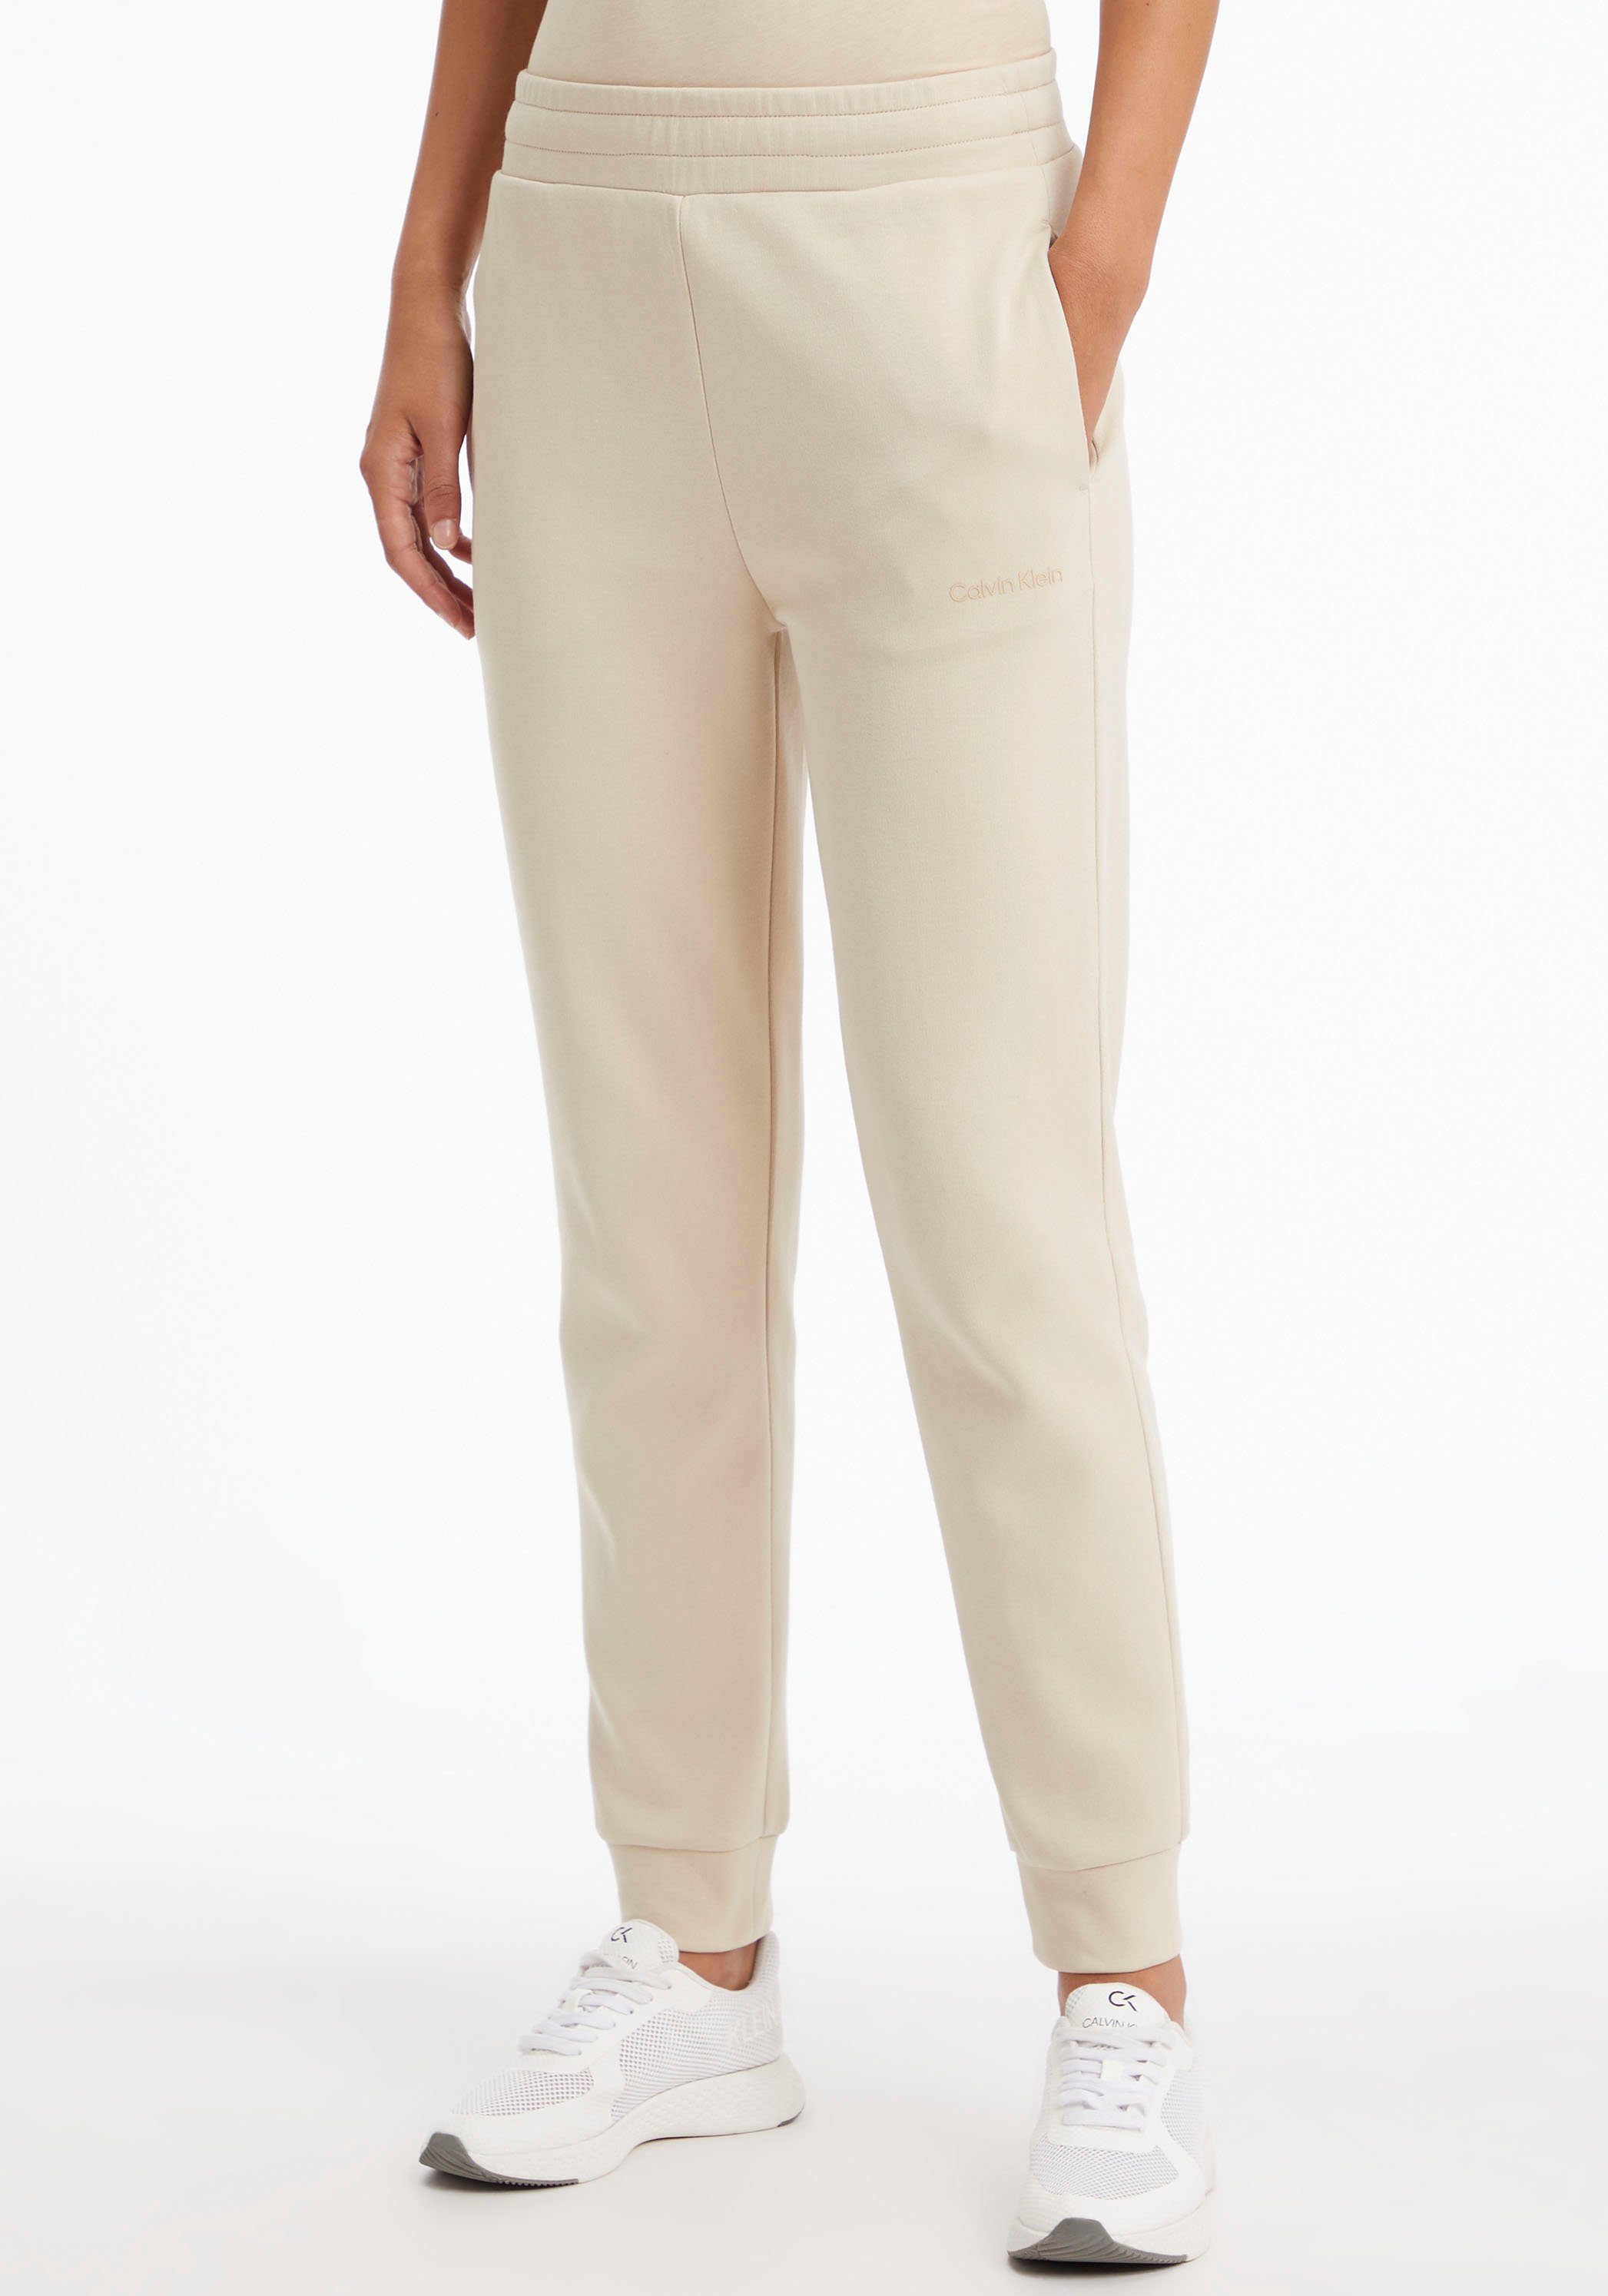 Calvin Klein Sweathose mit kontrastfarbenem Calvin Klein Logo beige | Jogginghosen